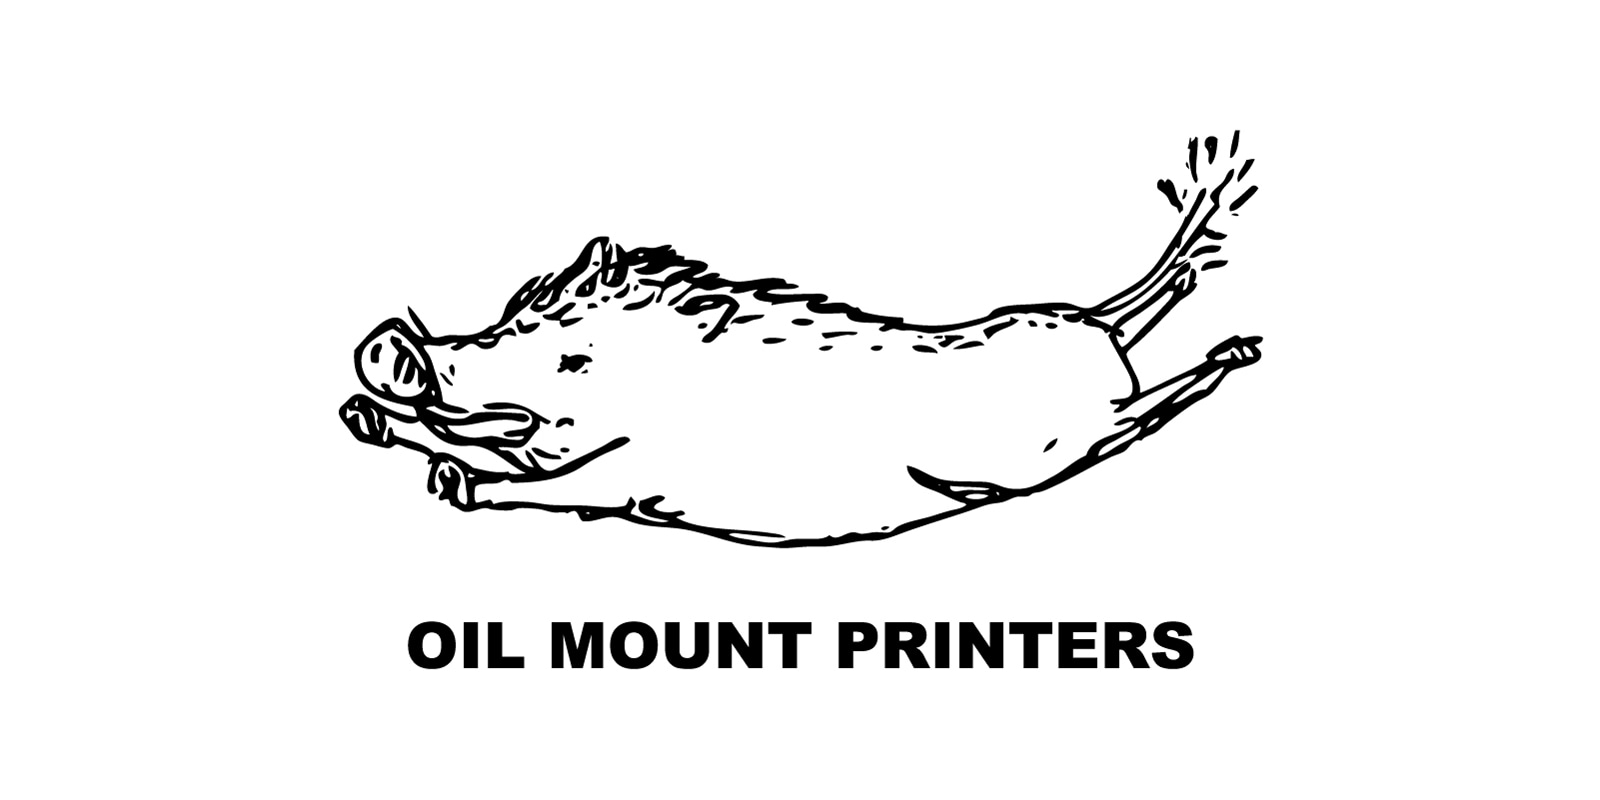 OIL MOUNT PRINTERS